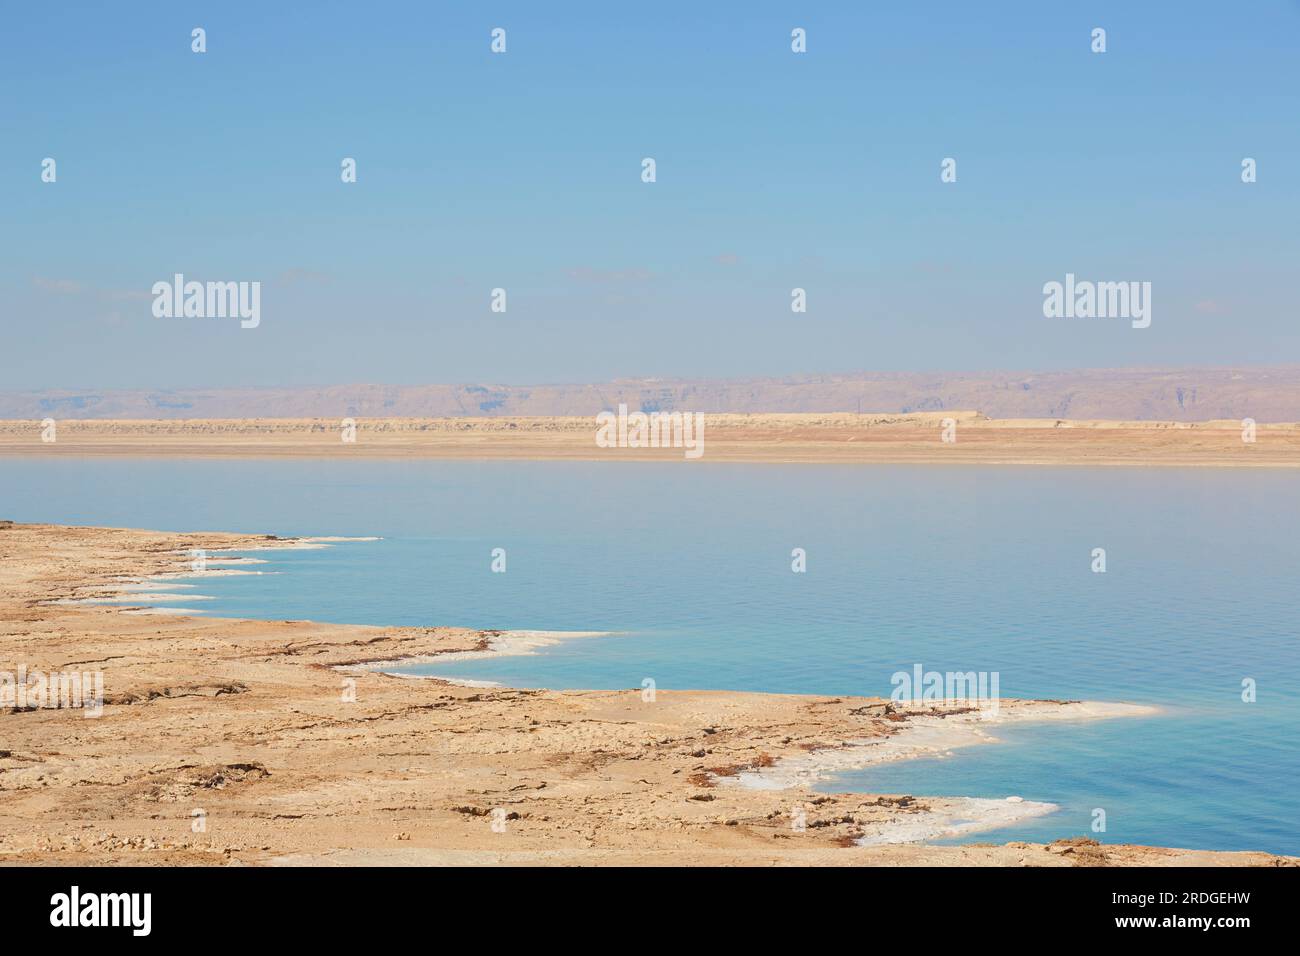 Barren landscape around The Dead Sea, the West Bank in the distance, Jordan Stock Photo